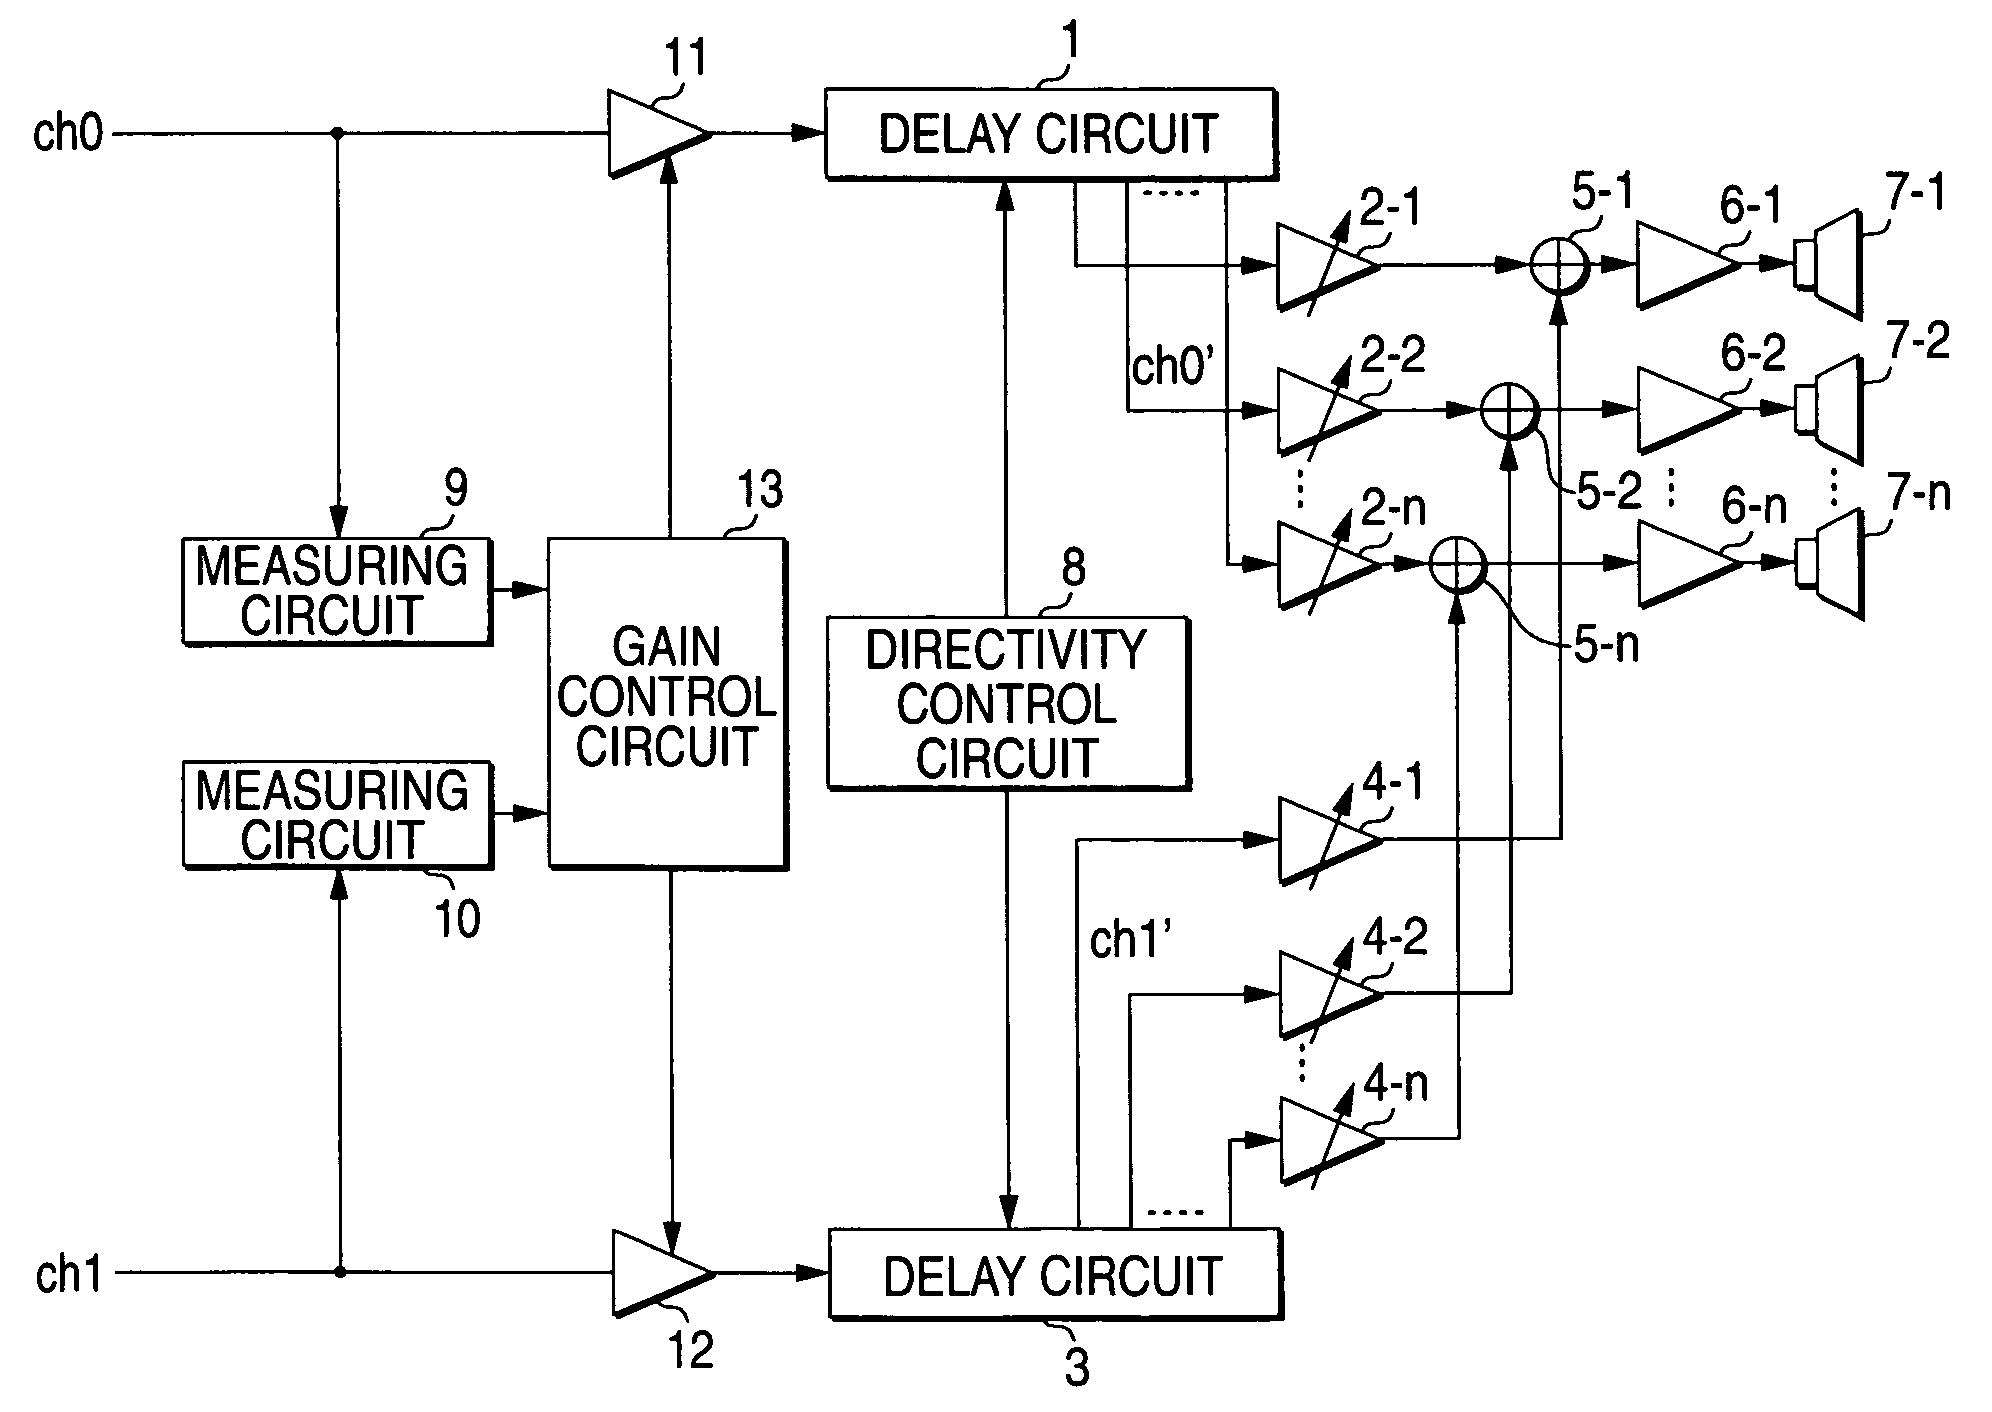 Audio output apparatus